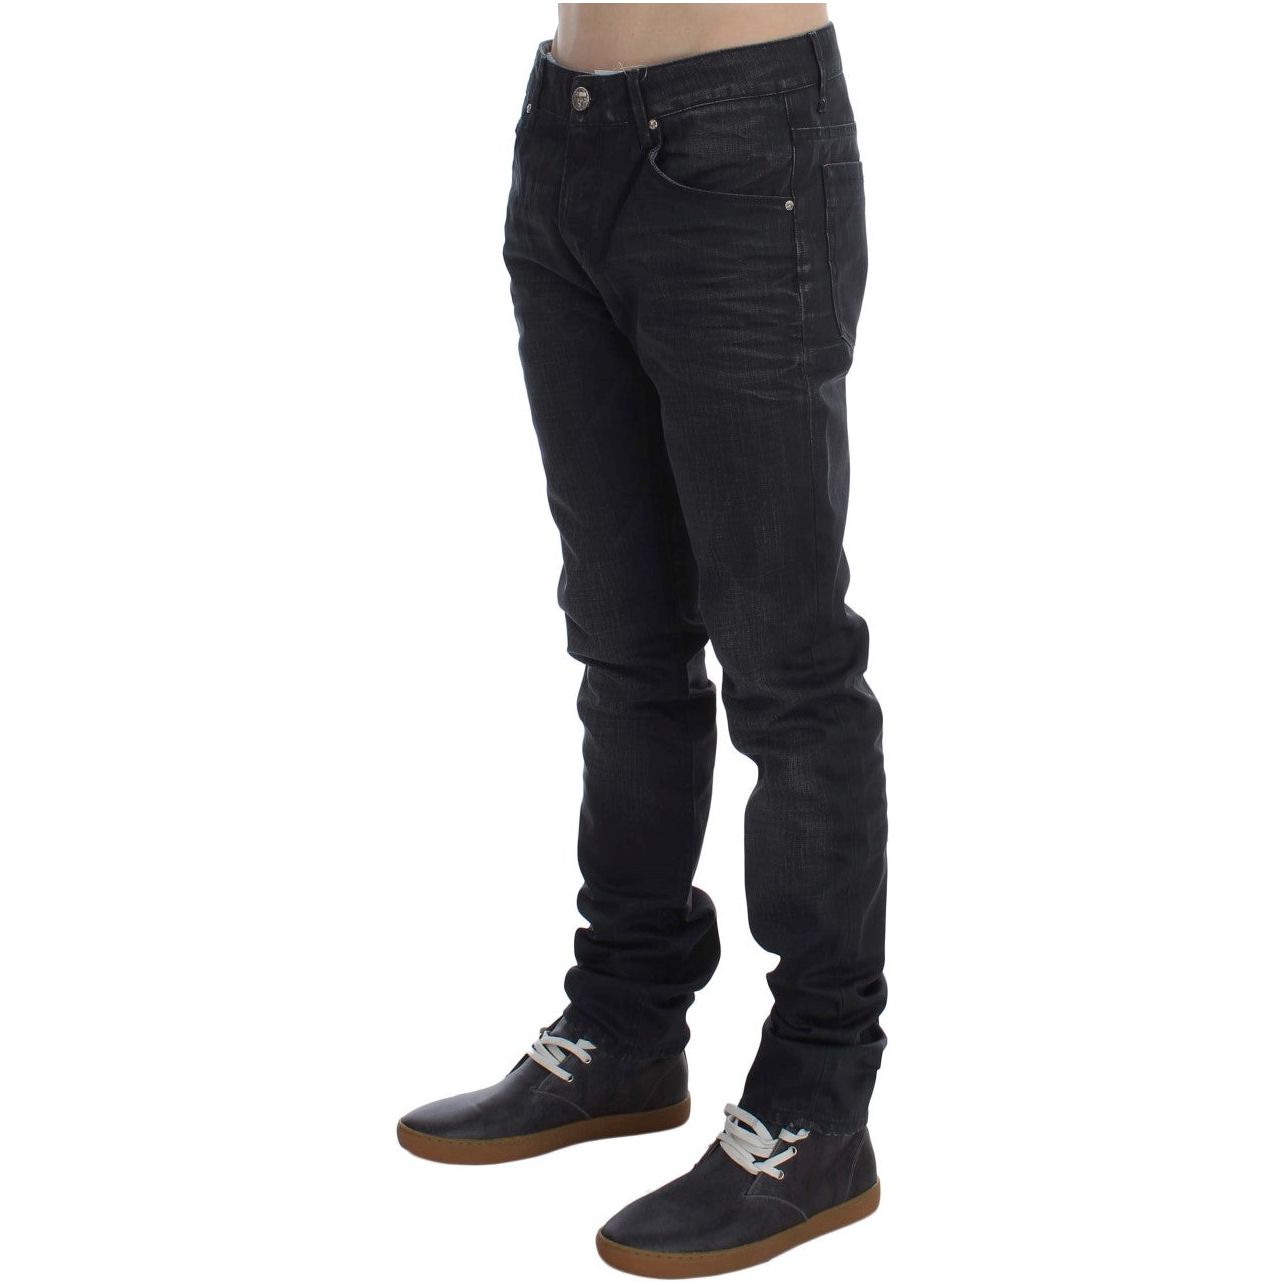 Acht Sleek Gray Slim Fit Italian Mens Jeans gray-cotton-skinny-slim-fit-jeans 298809-gray-cotton-skinny-slim-fit-jeans-1.jpg